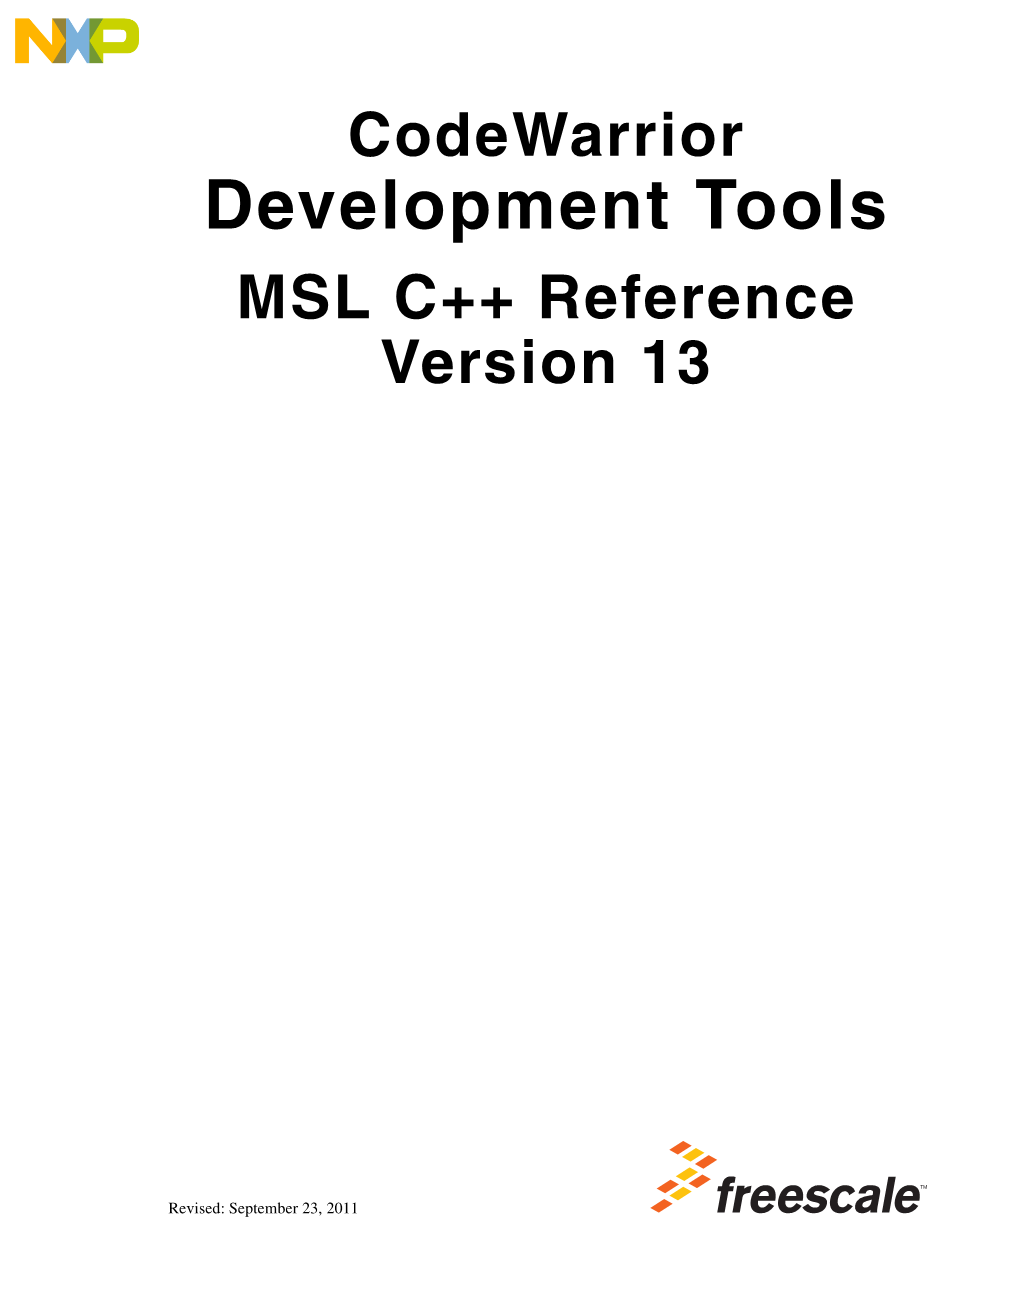 Codewarrior Development Tools MSL C++ Reference Version 13